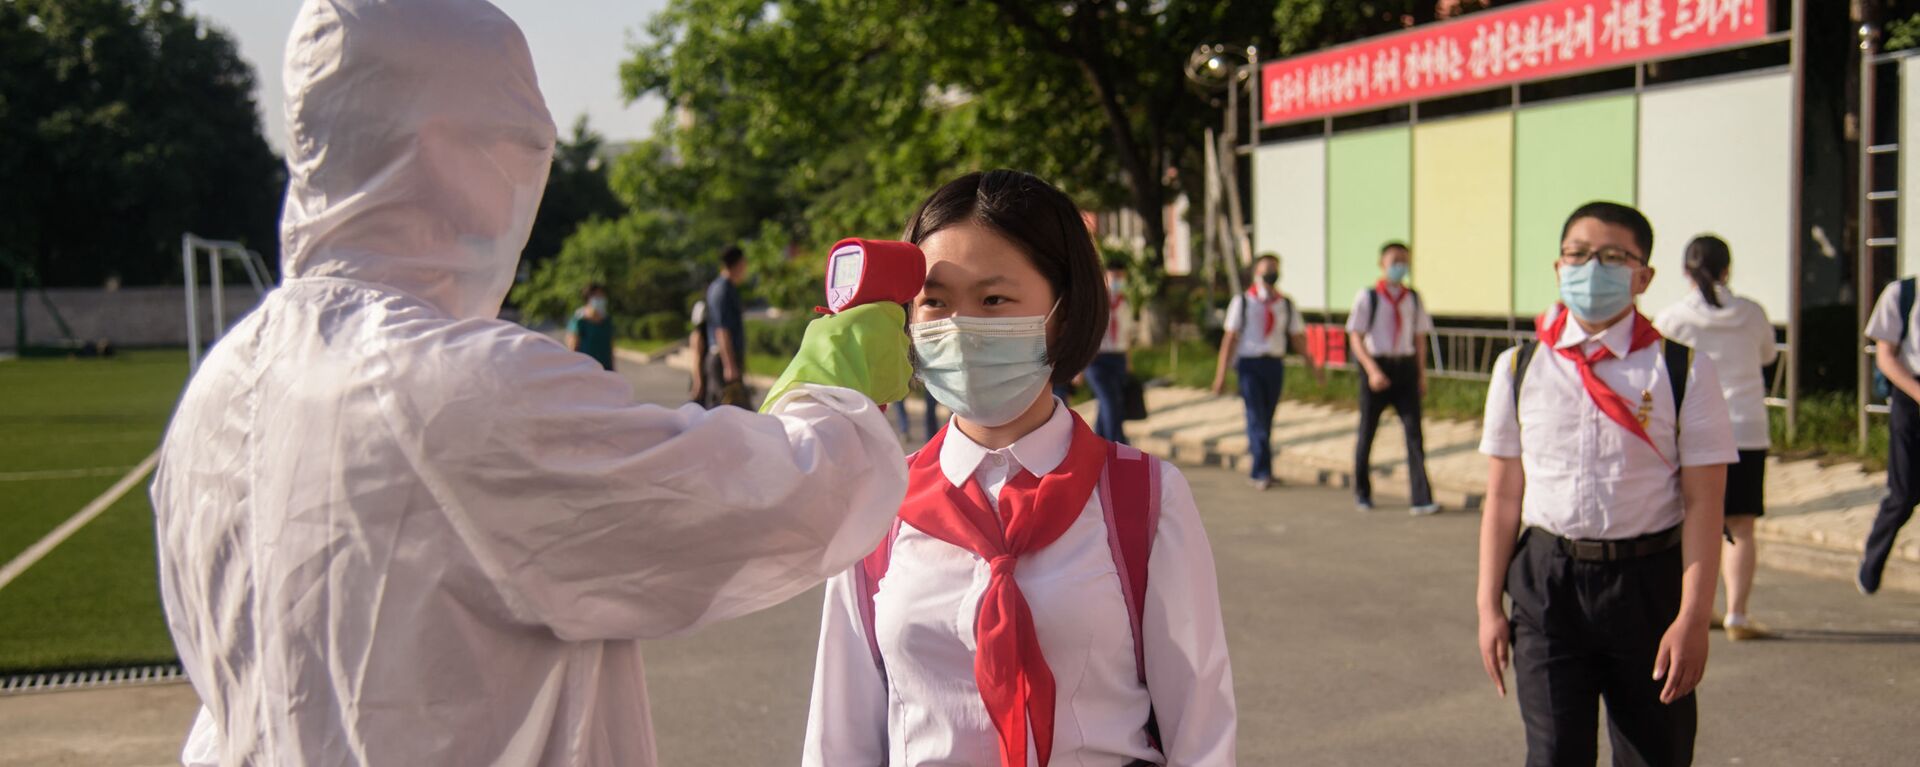 A pupil has her temperature taken as part of an anti-Covid-19 procedures before entering Pyongyang Secondary School No. 1 in Pyongyang on 22 June 2021 - Sputnik International, 1920, 03.09.2021